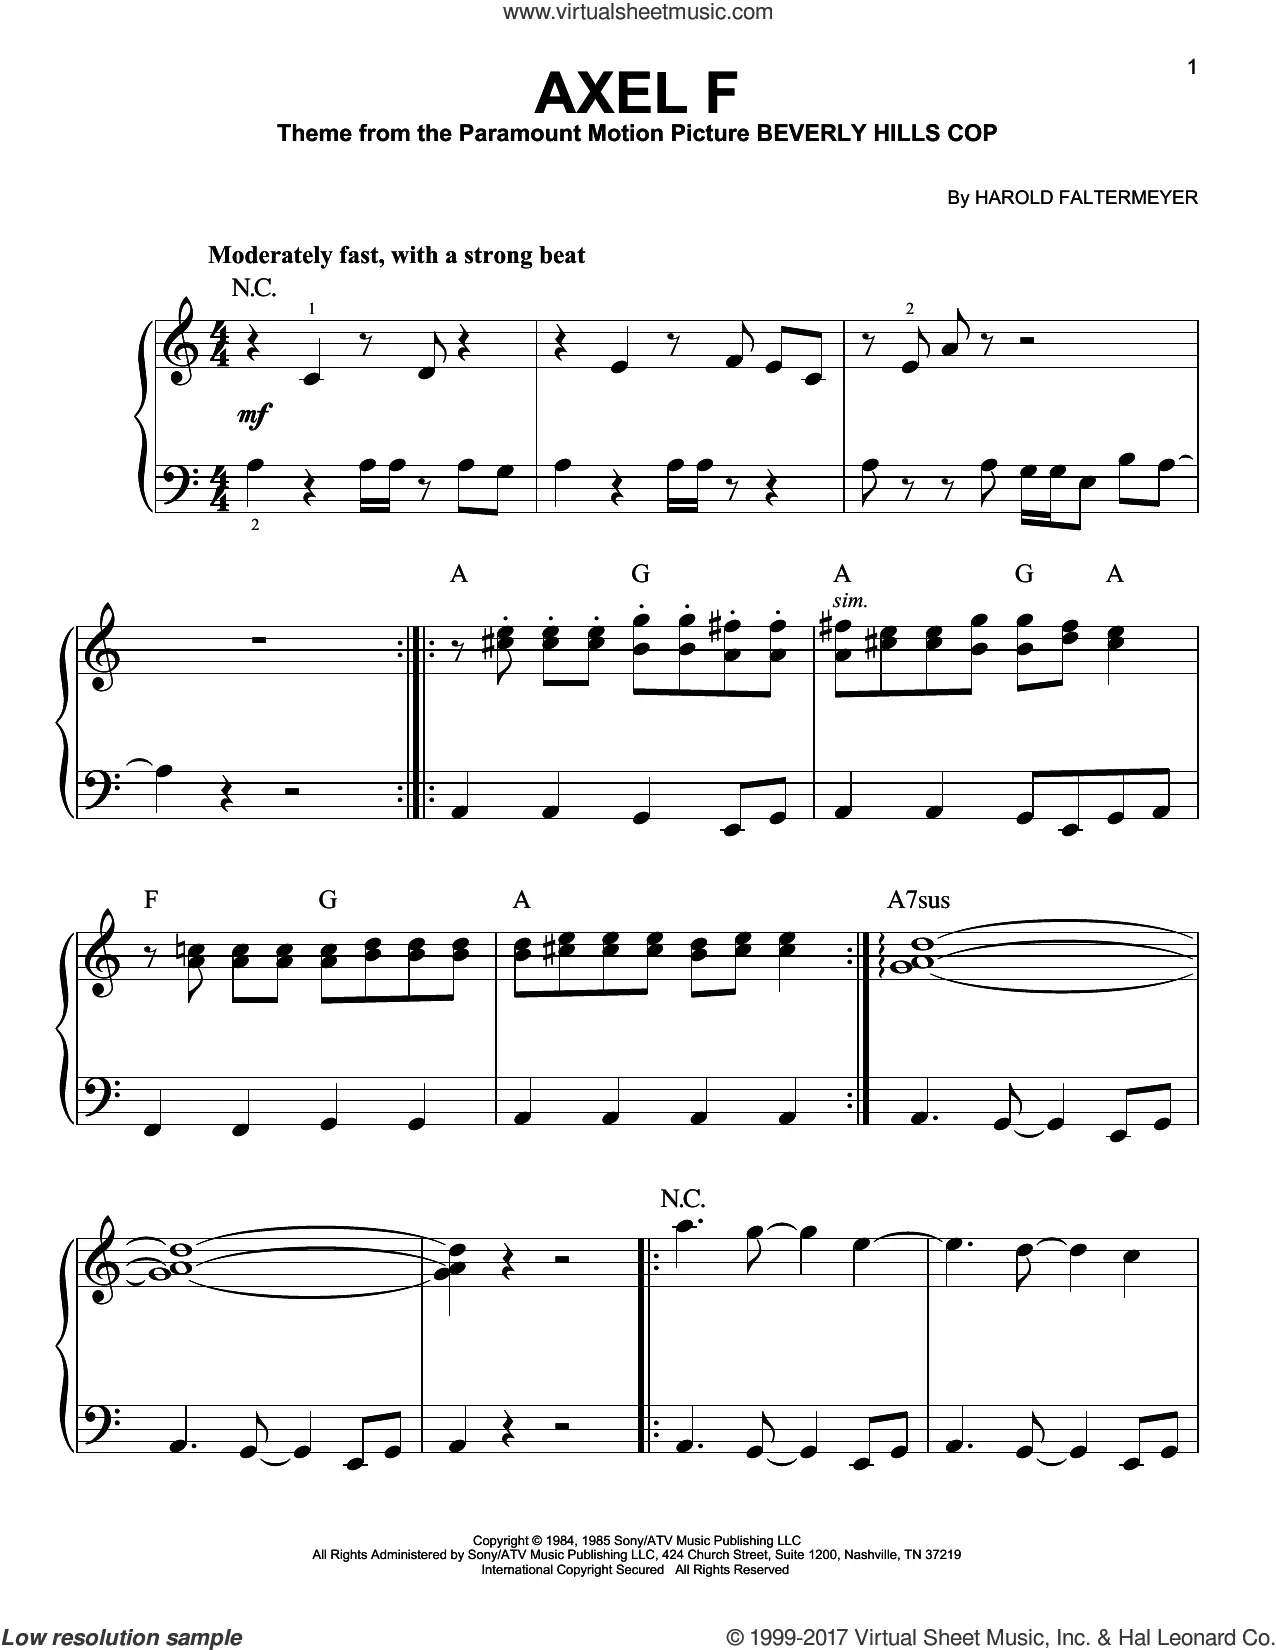 Top Gun Anthem by Harold Faltermeyer - Piano Solo - Digital Sheet Music